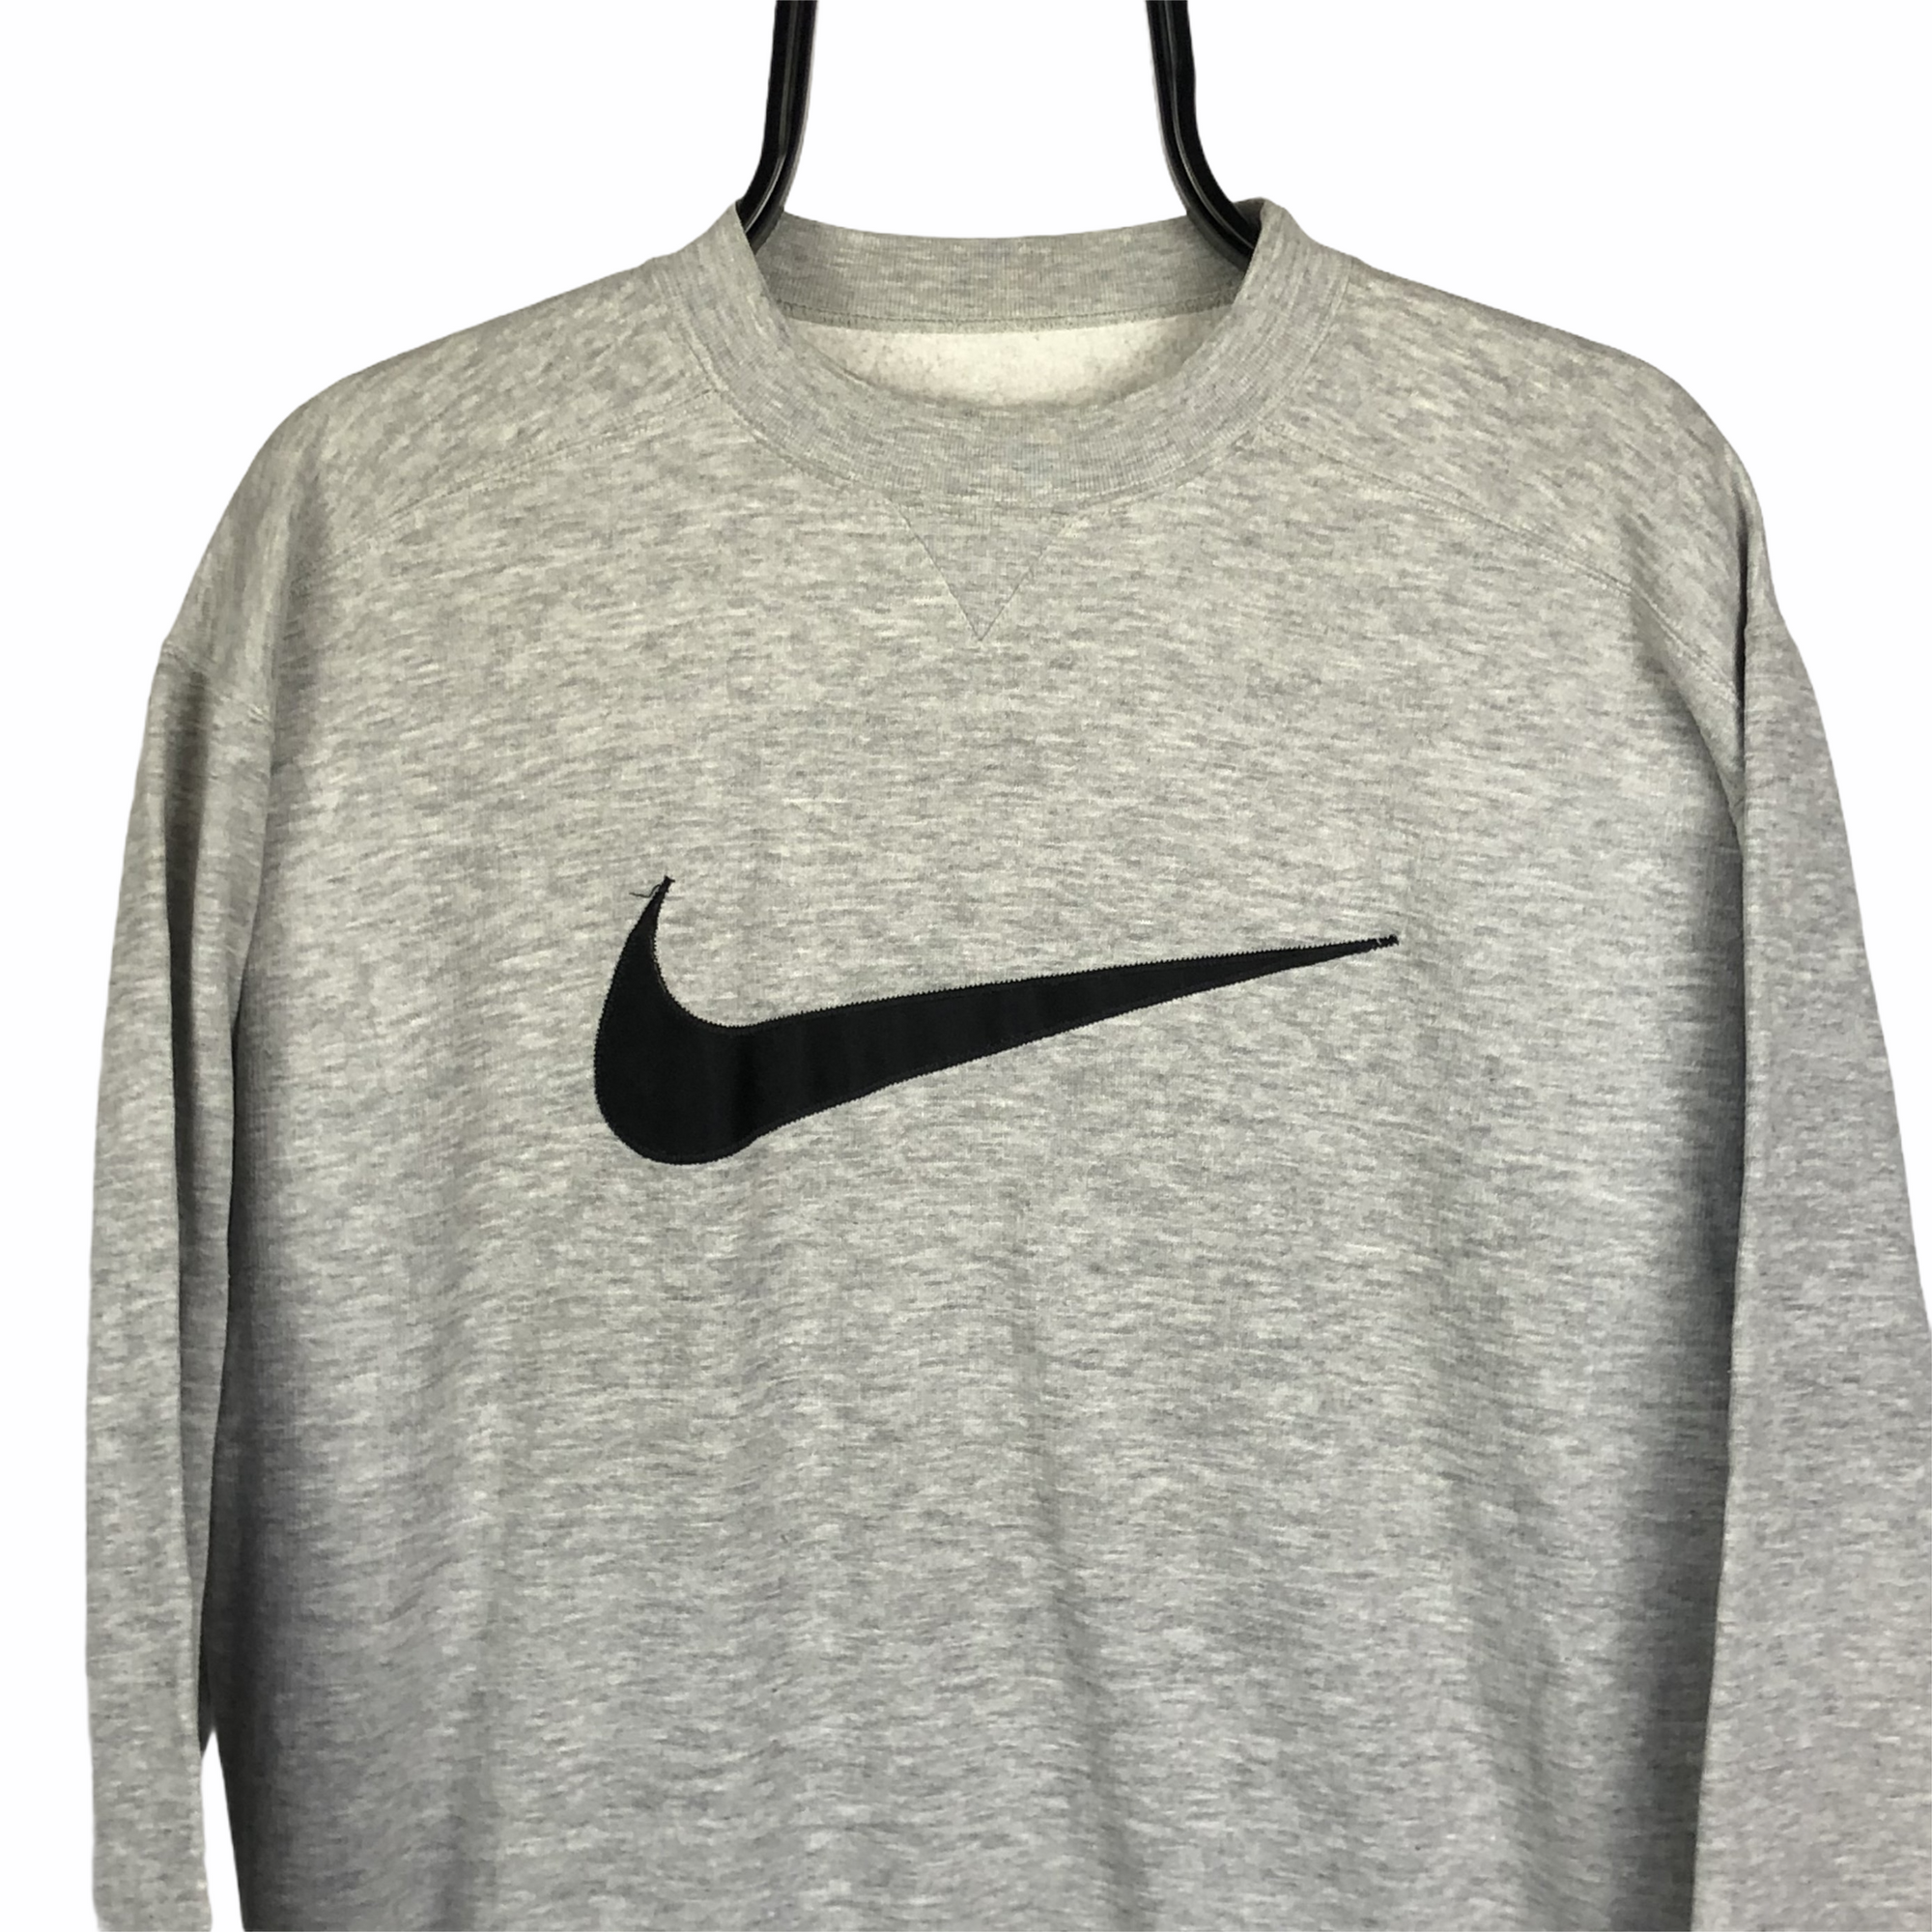 Vintage 90s Nike Embroidered Big Swoosh Sweatshirt in Grey - Men's Medium/Women's Large